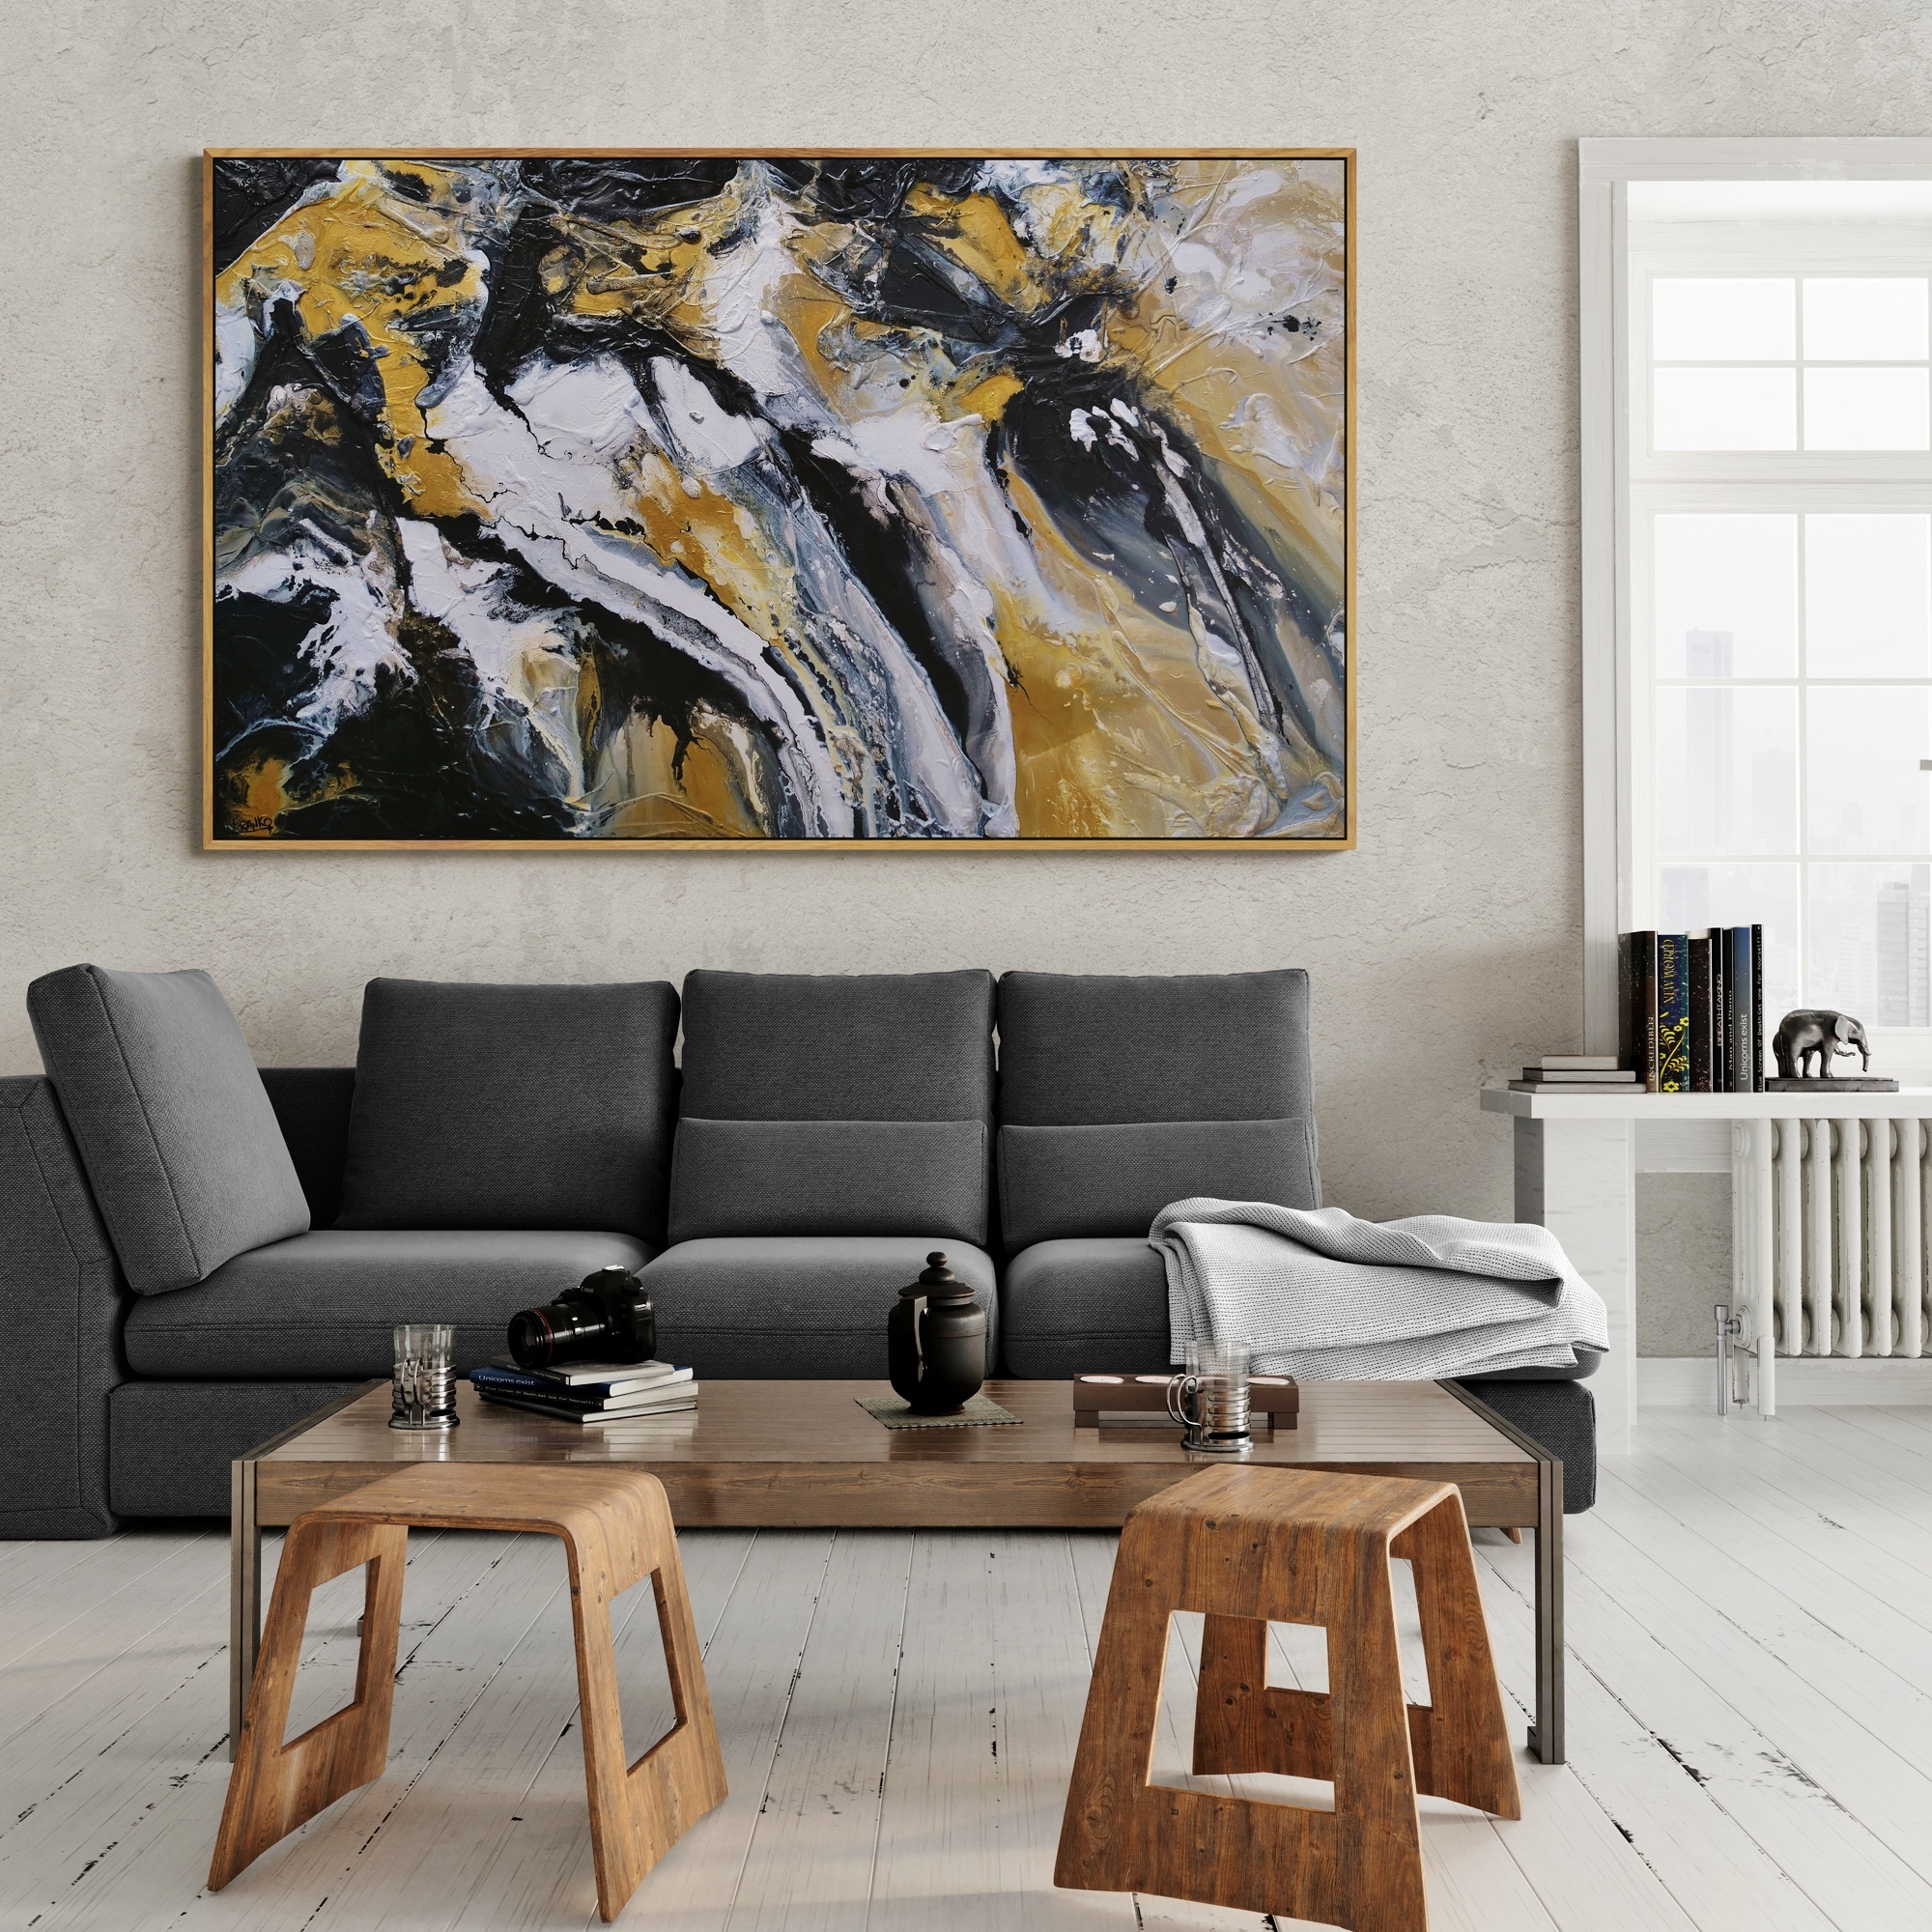 Studio Living Room With Modern Furnishings (1)